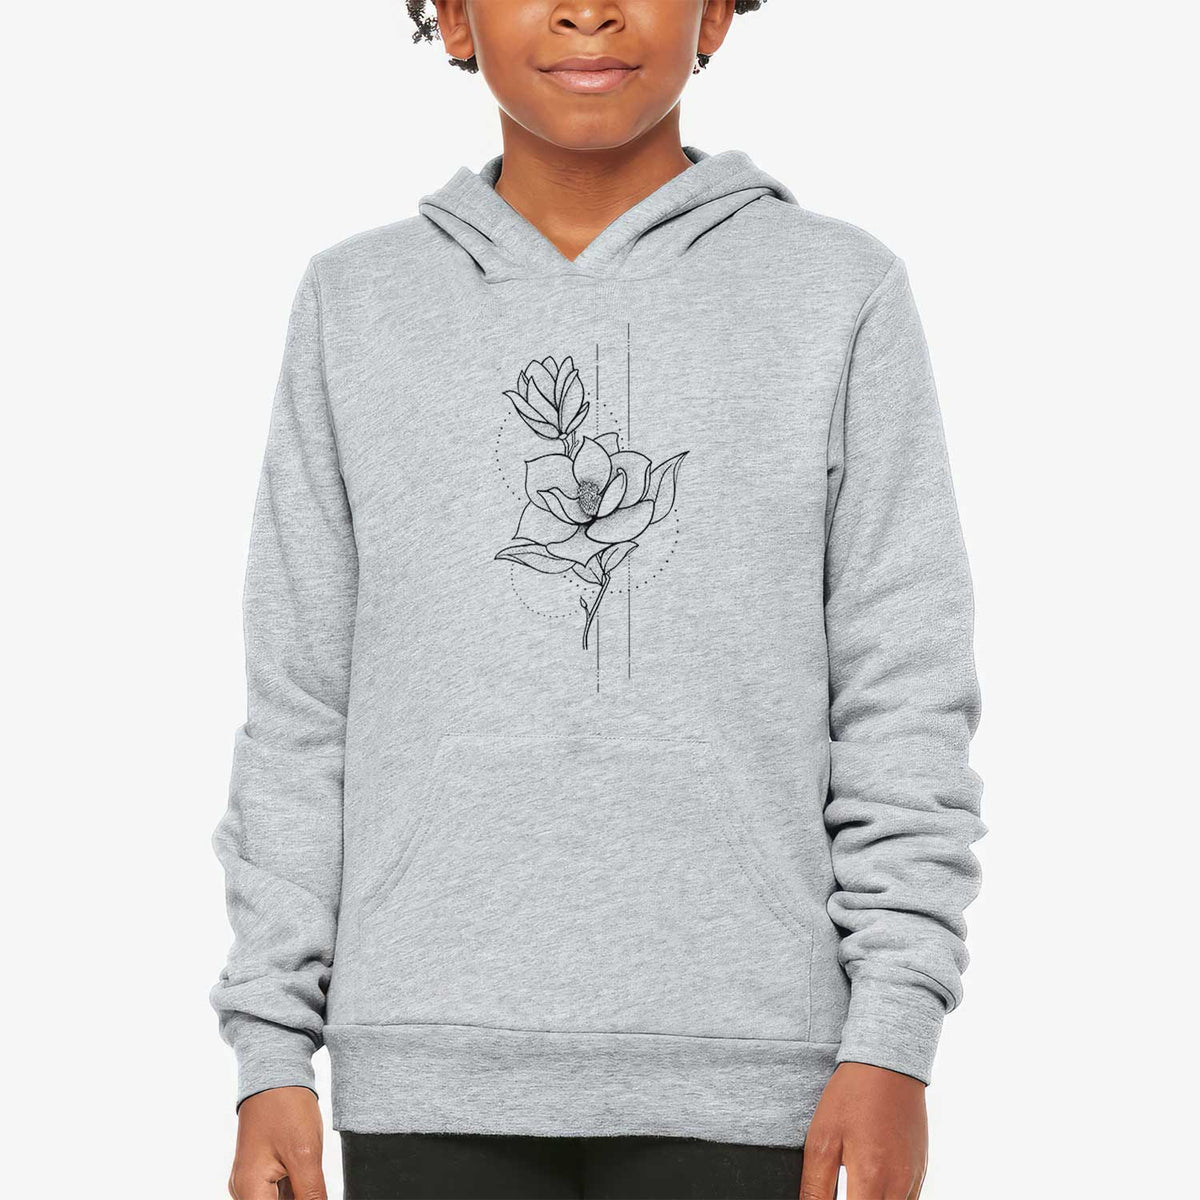 Southern Magnolia Stem - Youth Hoodie Sweatshirt